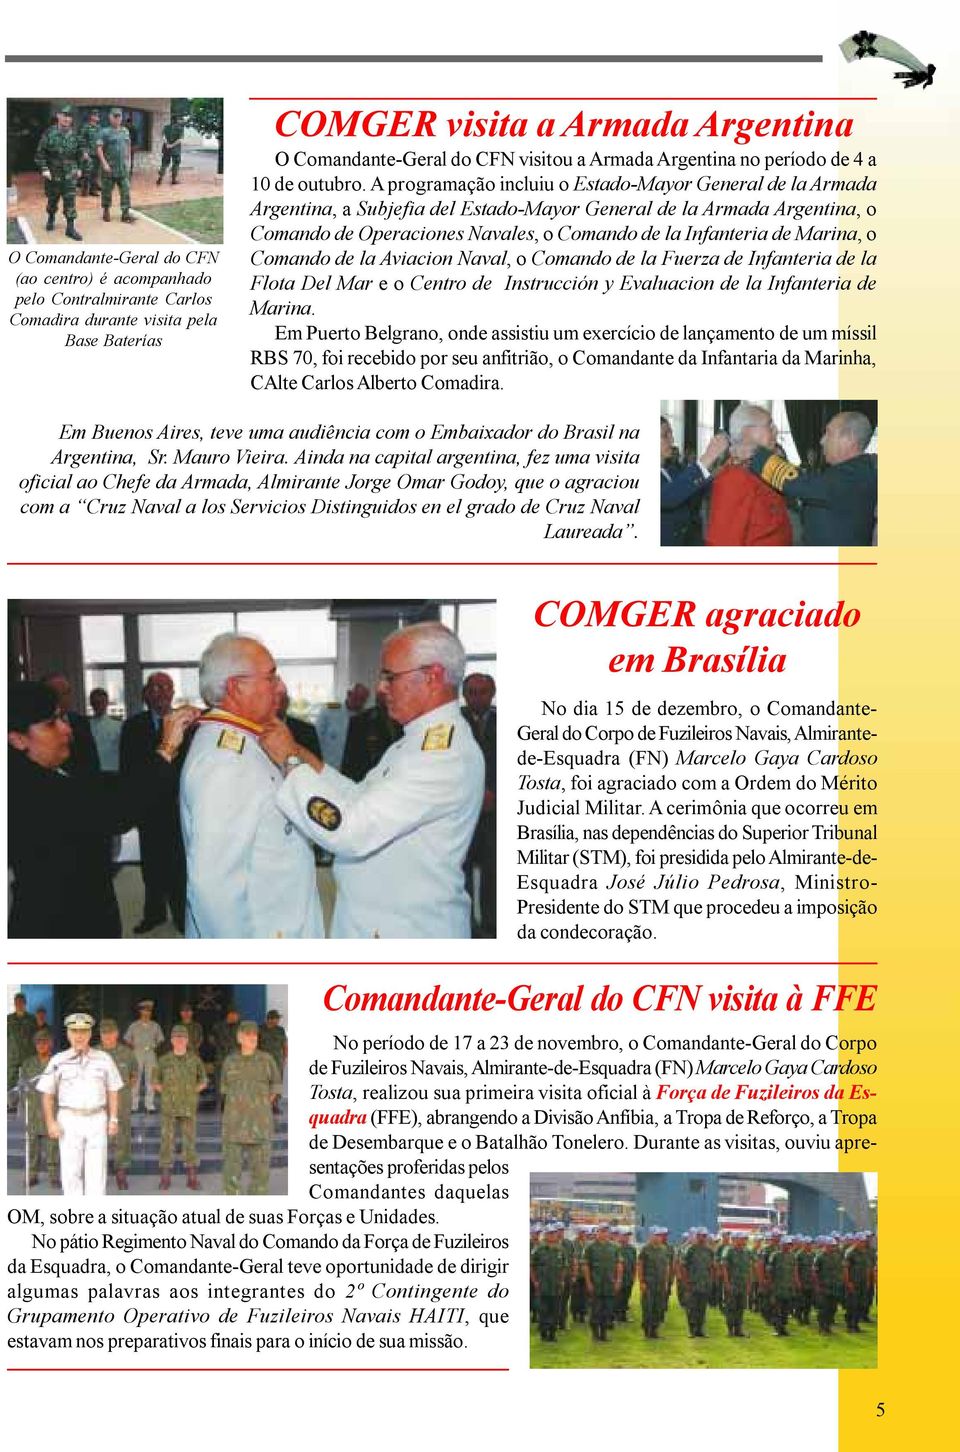 A programação incluiu o Estado-Mayor General de la Armada Argentina, a Subjefia del Estado-Mayor General de la Armada Argentina, o Comando de Operaciones Navales, o Comando de la Infanteria de